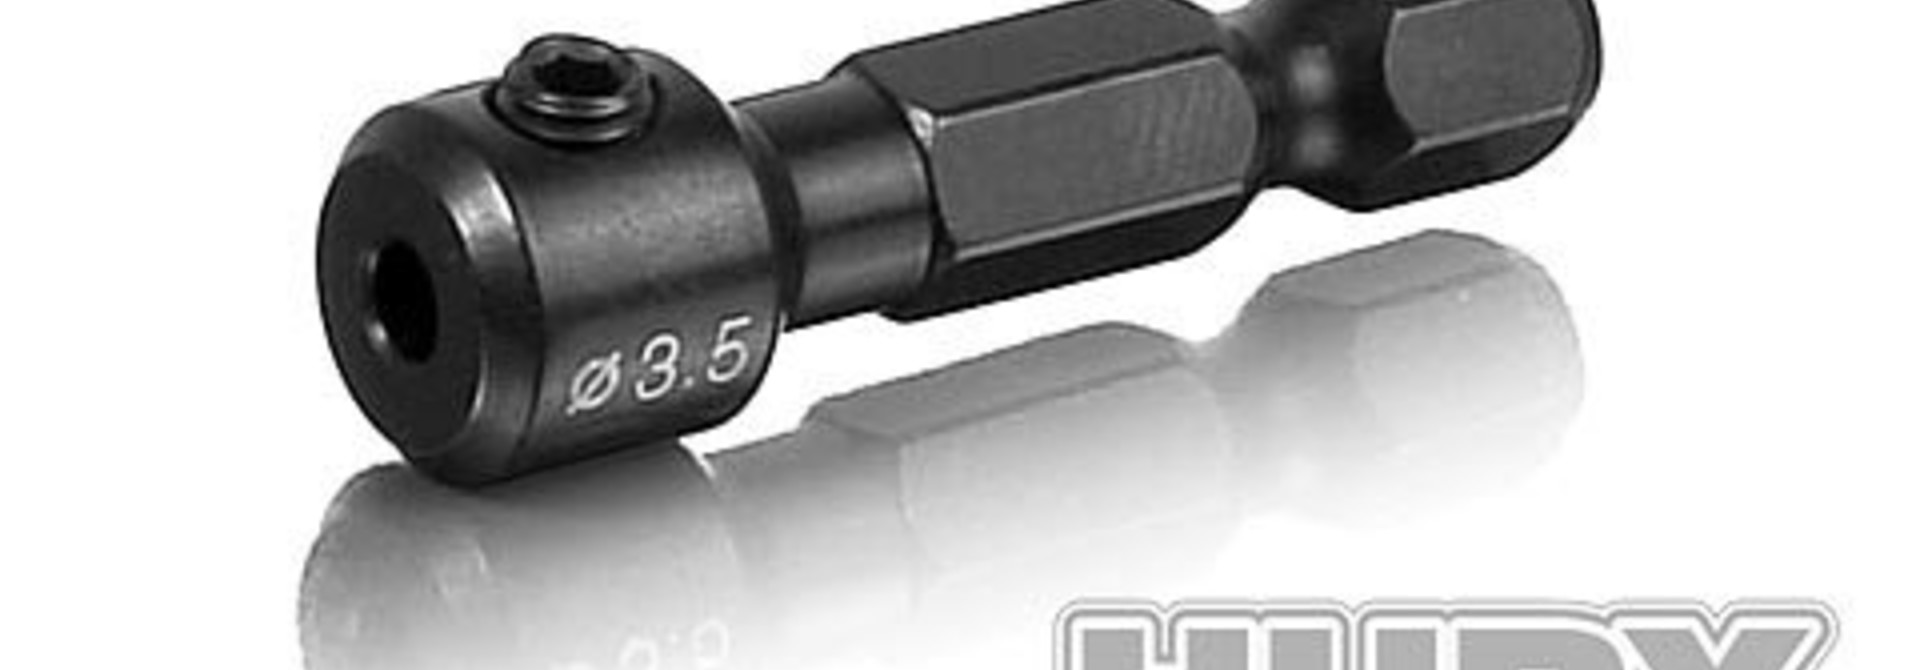 Pin Adapter 3.5mm For El. Screwdriver. H111035